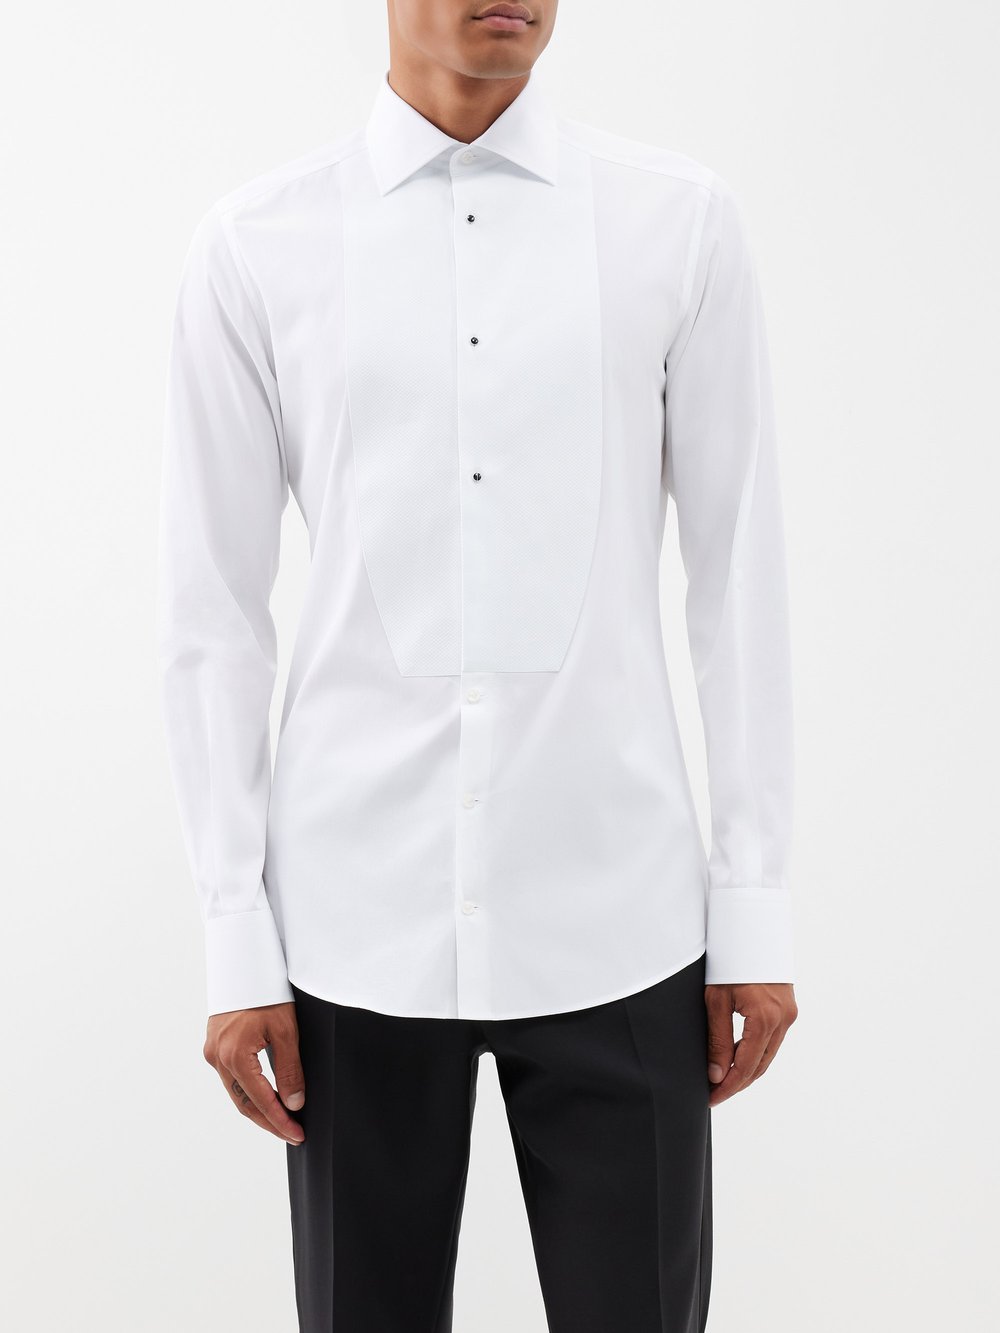 Рубашка под смокинг из хлопка и поплина из пике-пластрона Dolce & Gabbana, белый